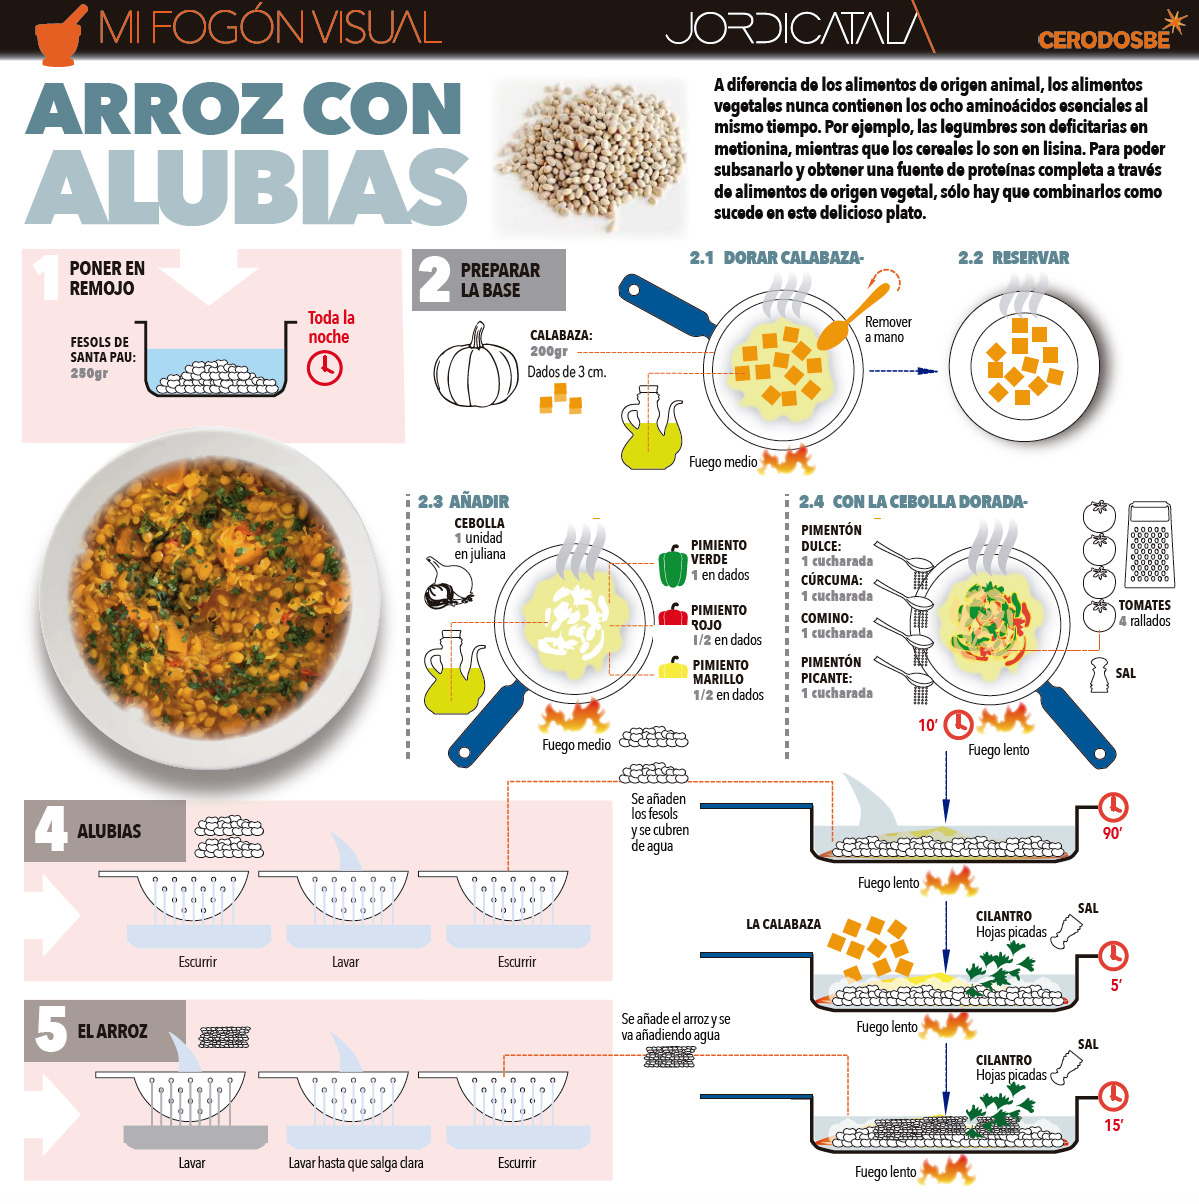 Alubias y arroz. InfografÃ­a Jordi CatalÃ¡.